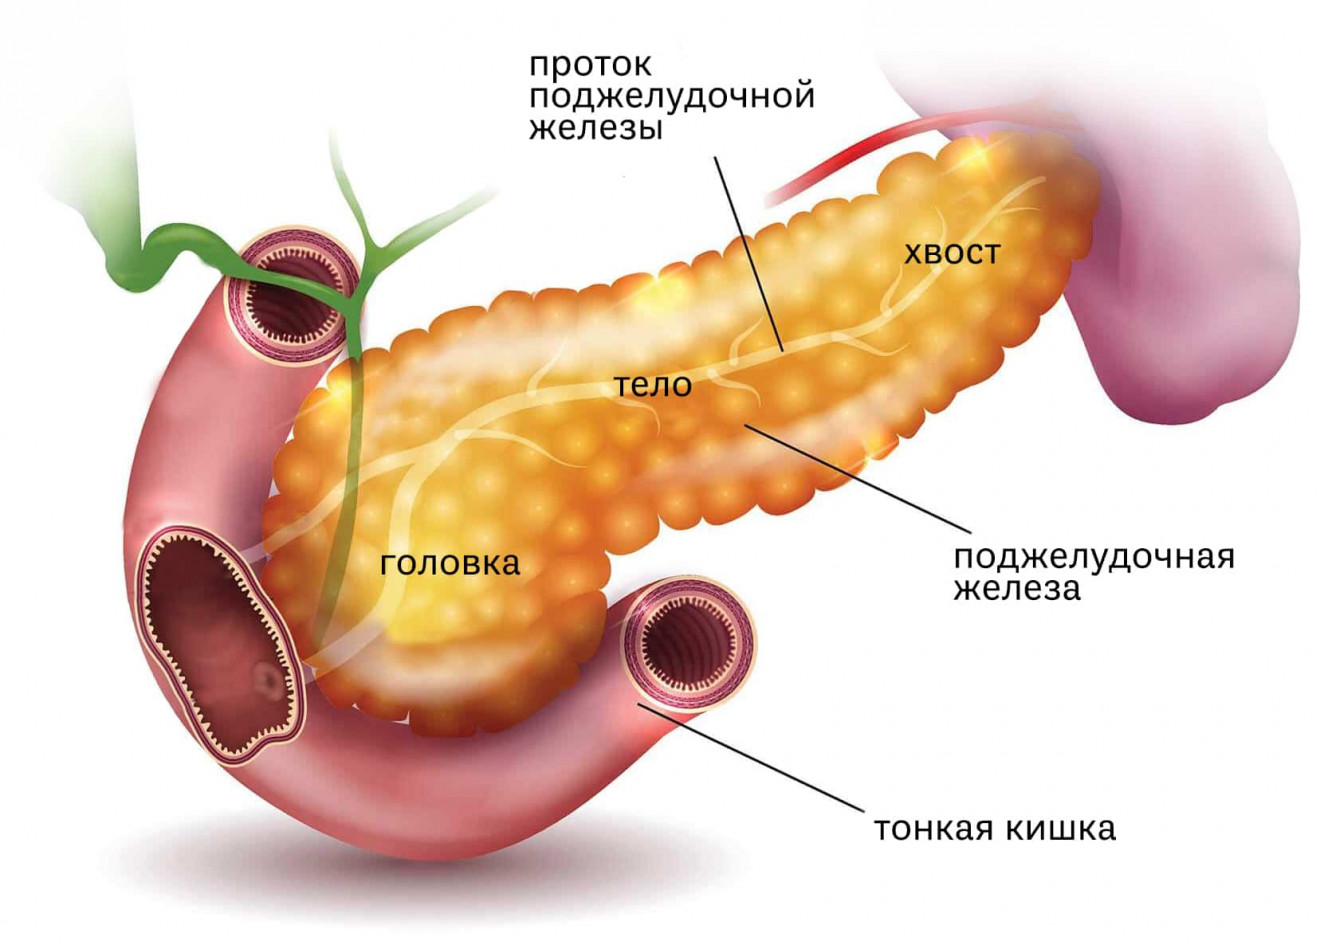 Поджелудочная железа анатомия